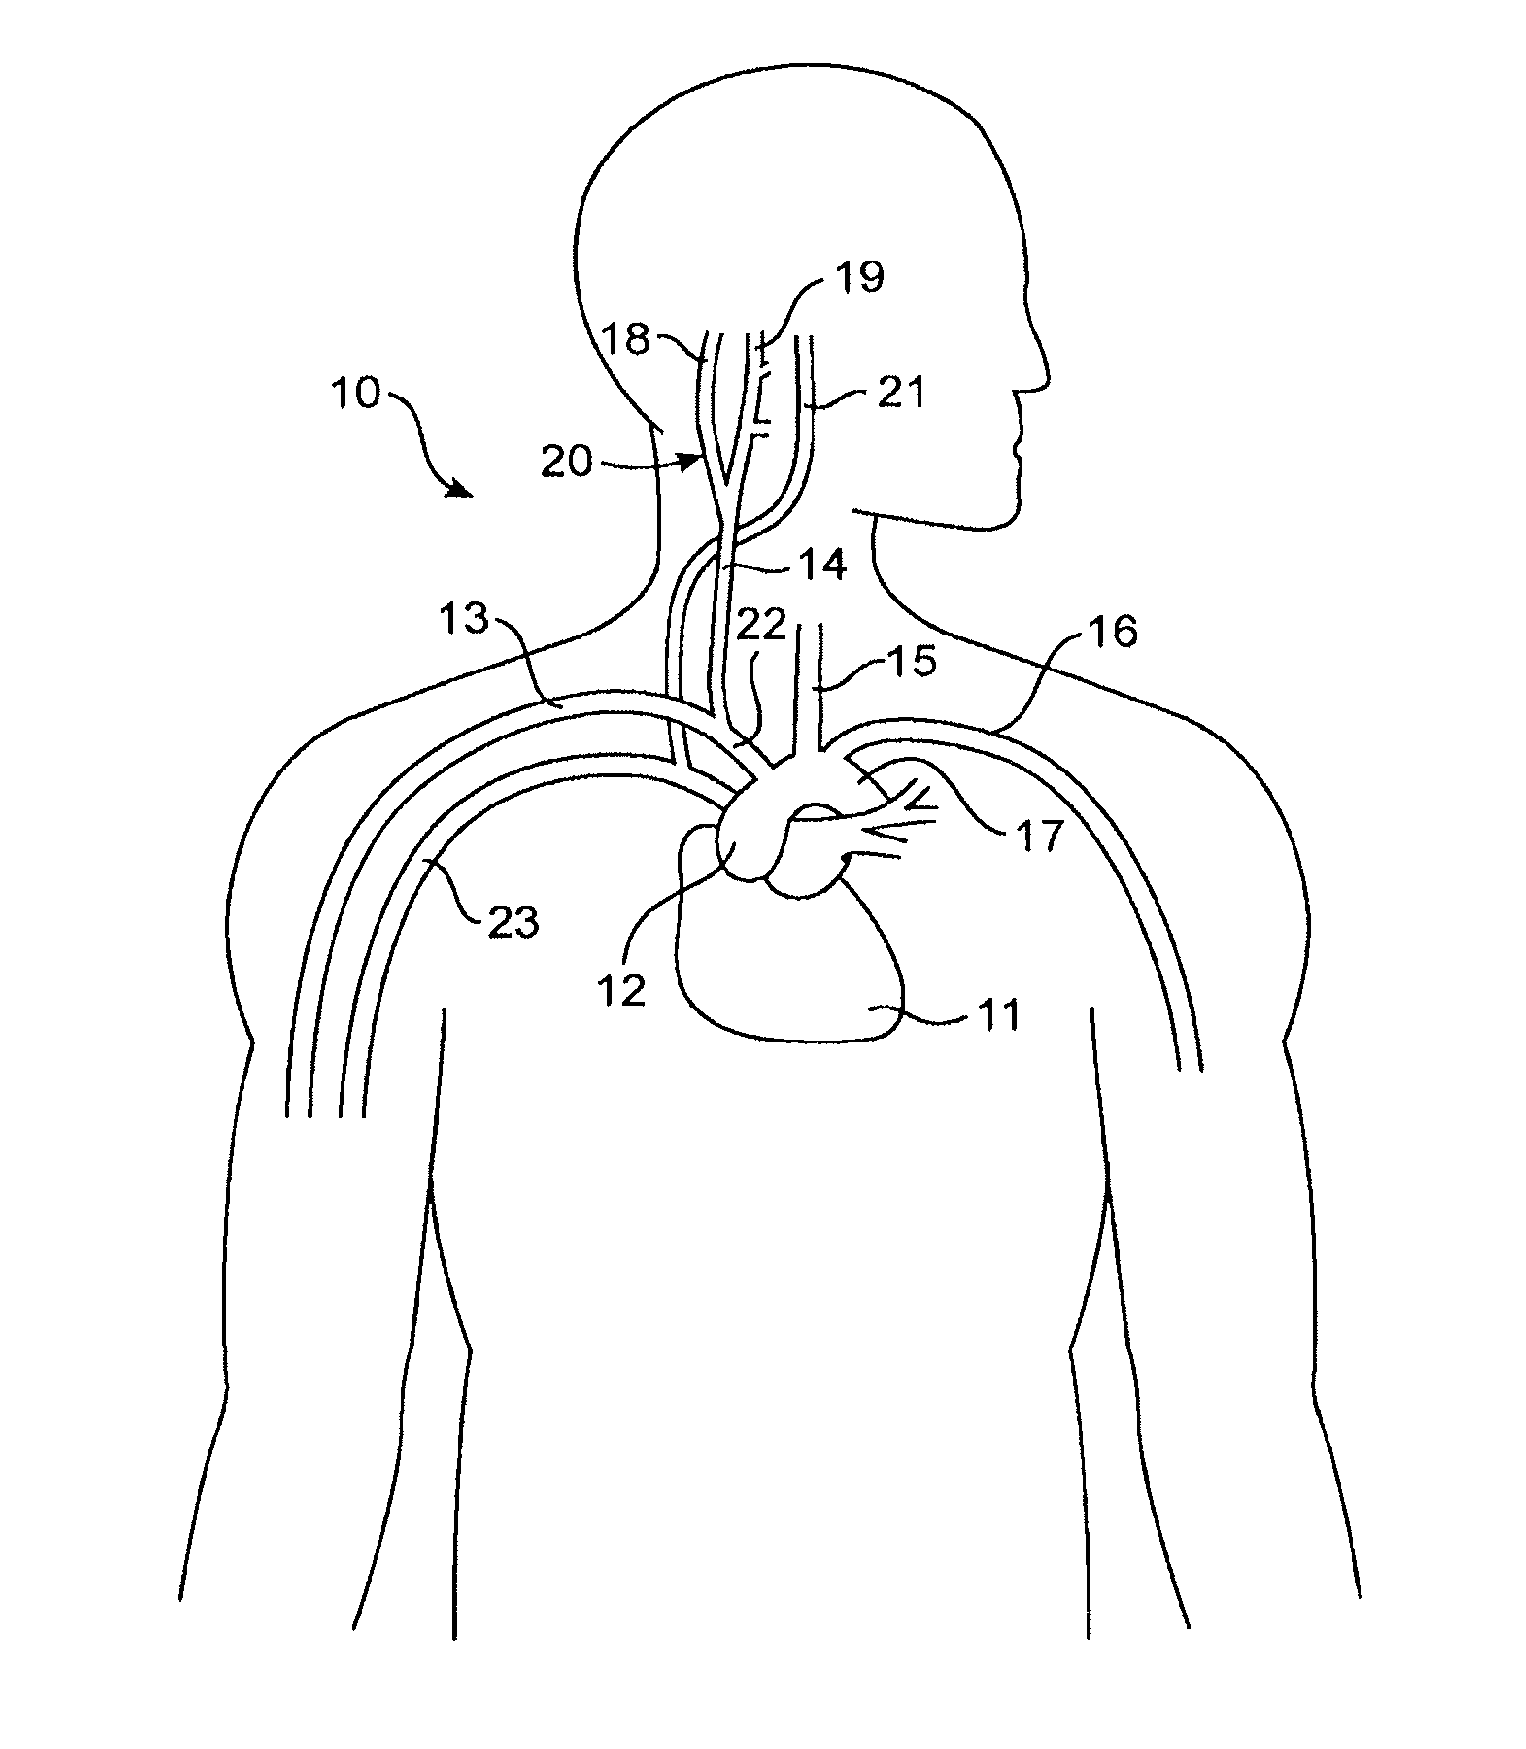 ECG input to implantable pulse generator using carotid sinus leads